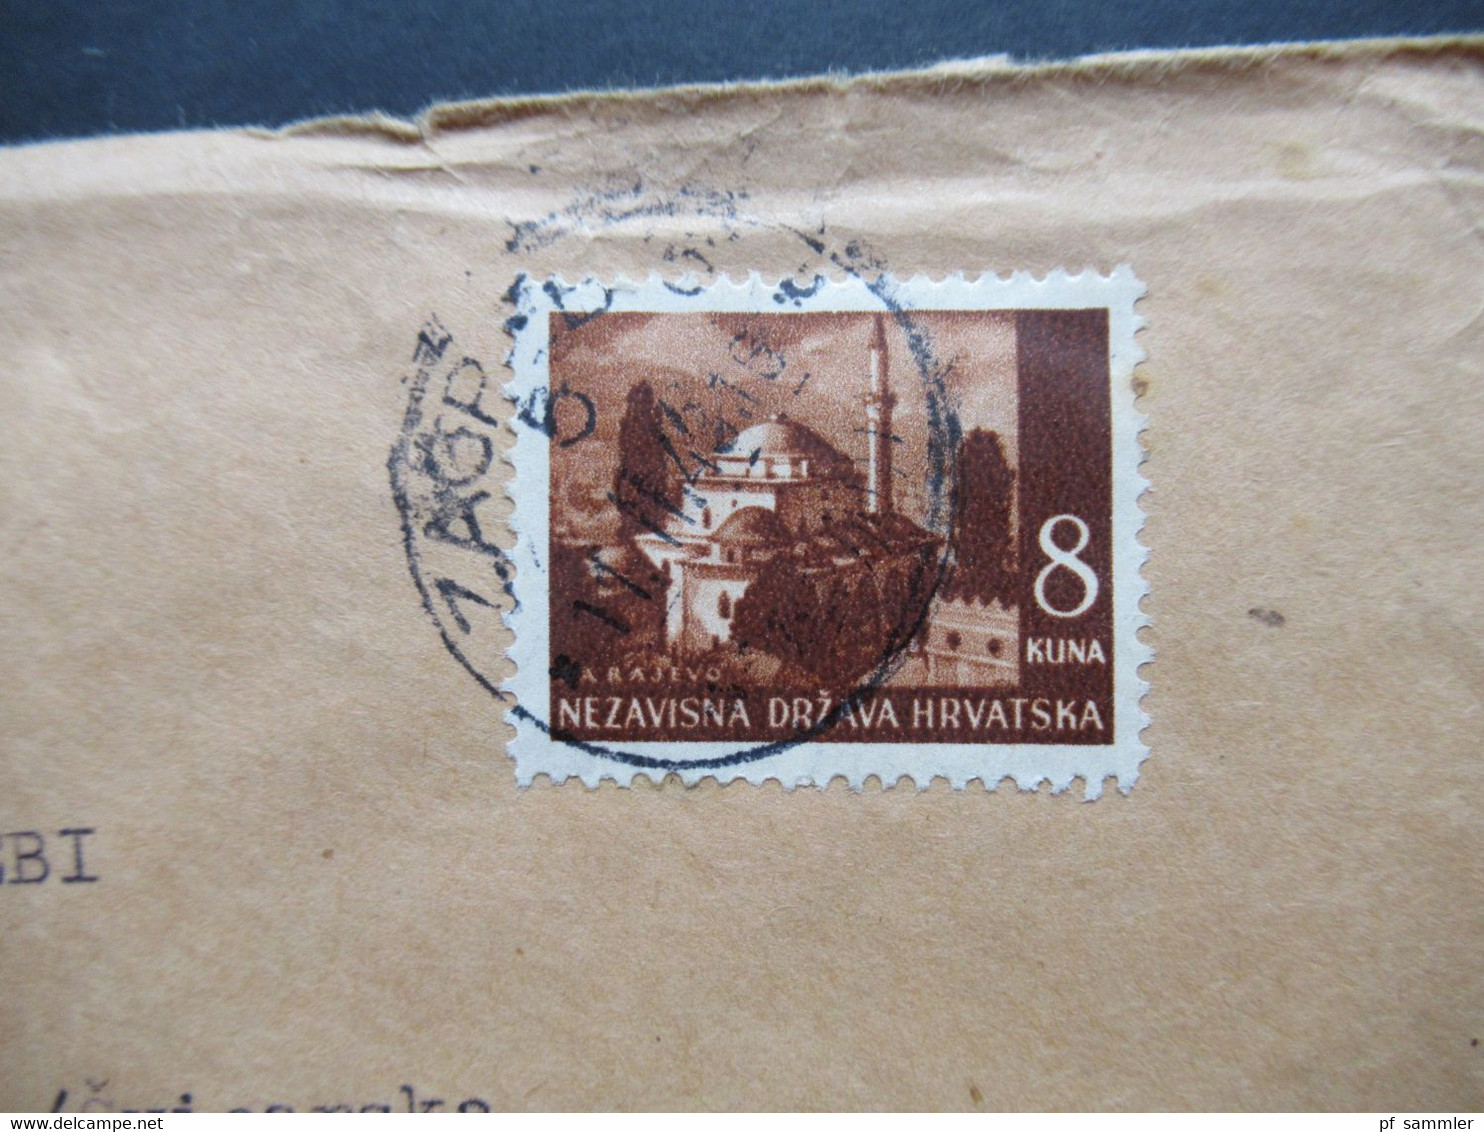 Kroatien 1943 Zensurbeleg Freimarken Landschaften Nr. 59 EF OKW Mehrfachzensur Abs: Dr. VUK Von Smic Vakanovic Nach Bern - Croacia